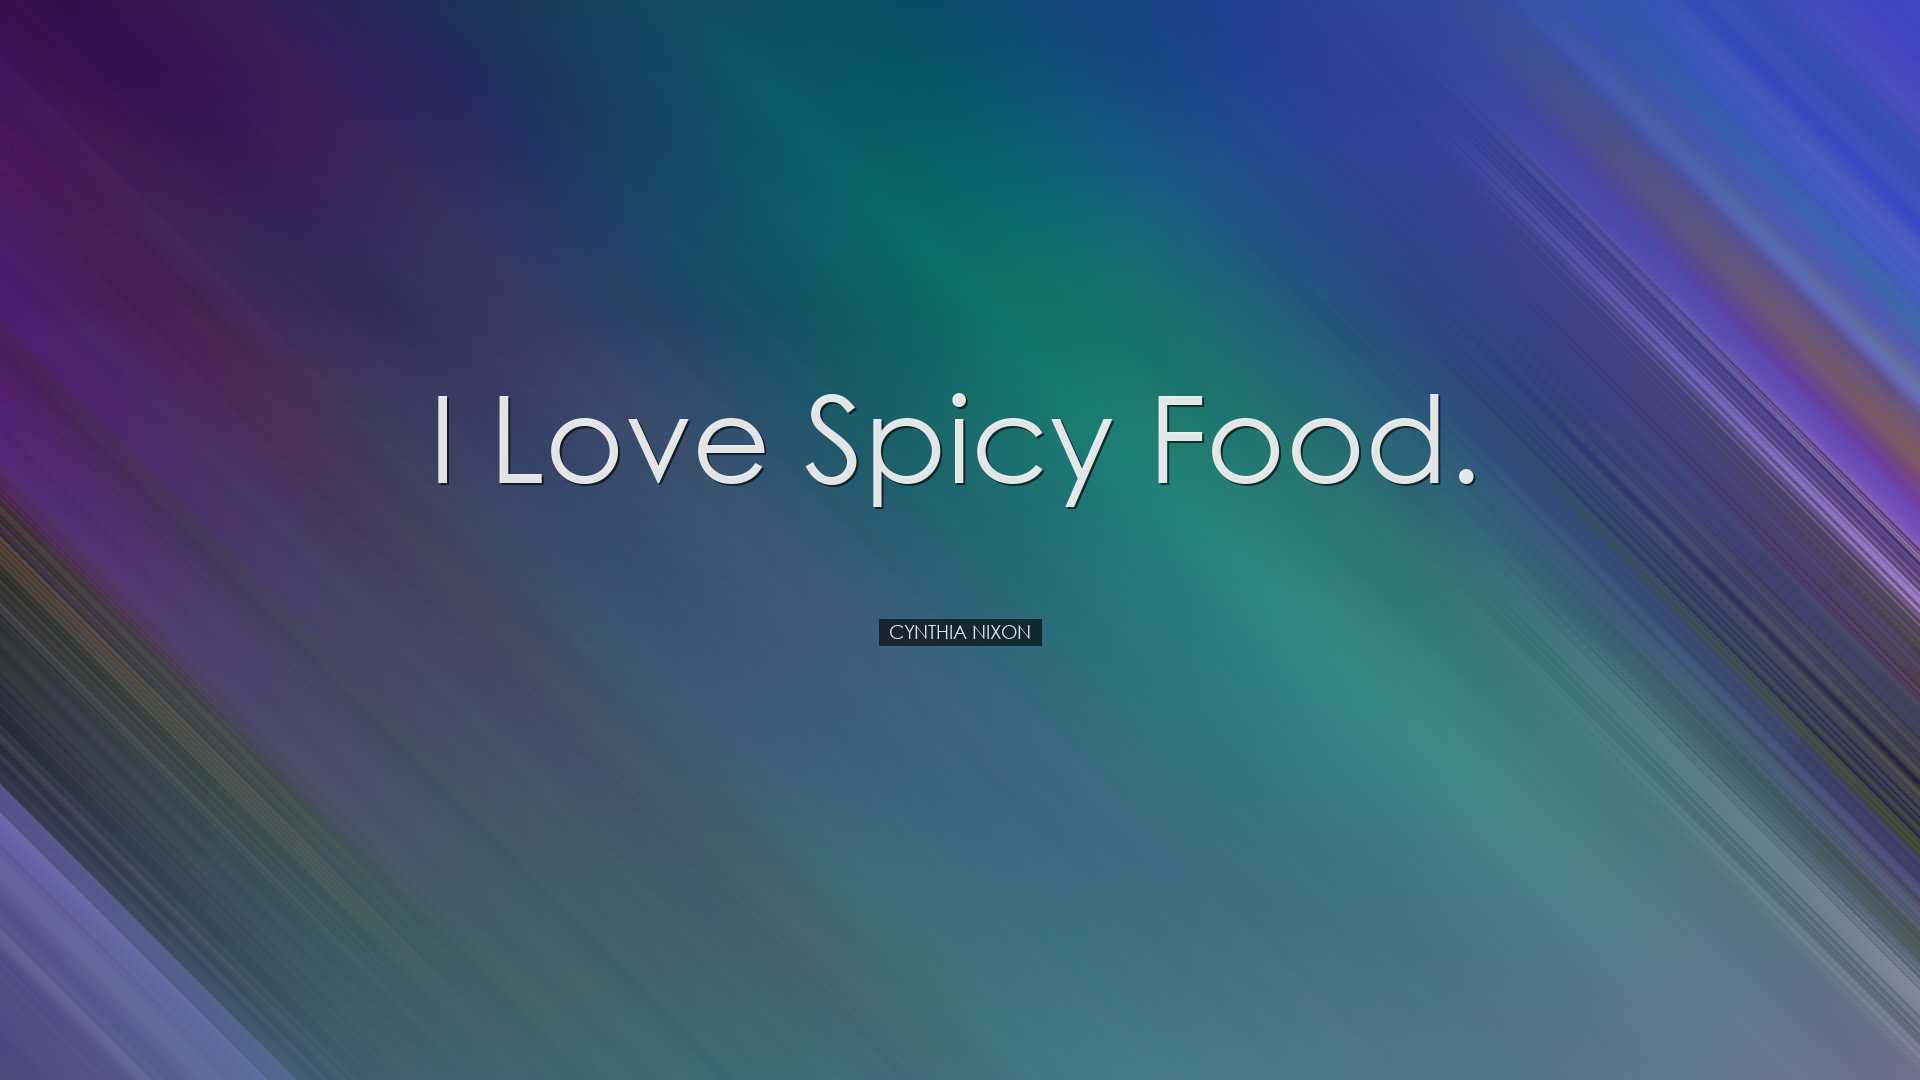 I love spicy food. - Cynthia Nixon